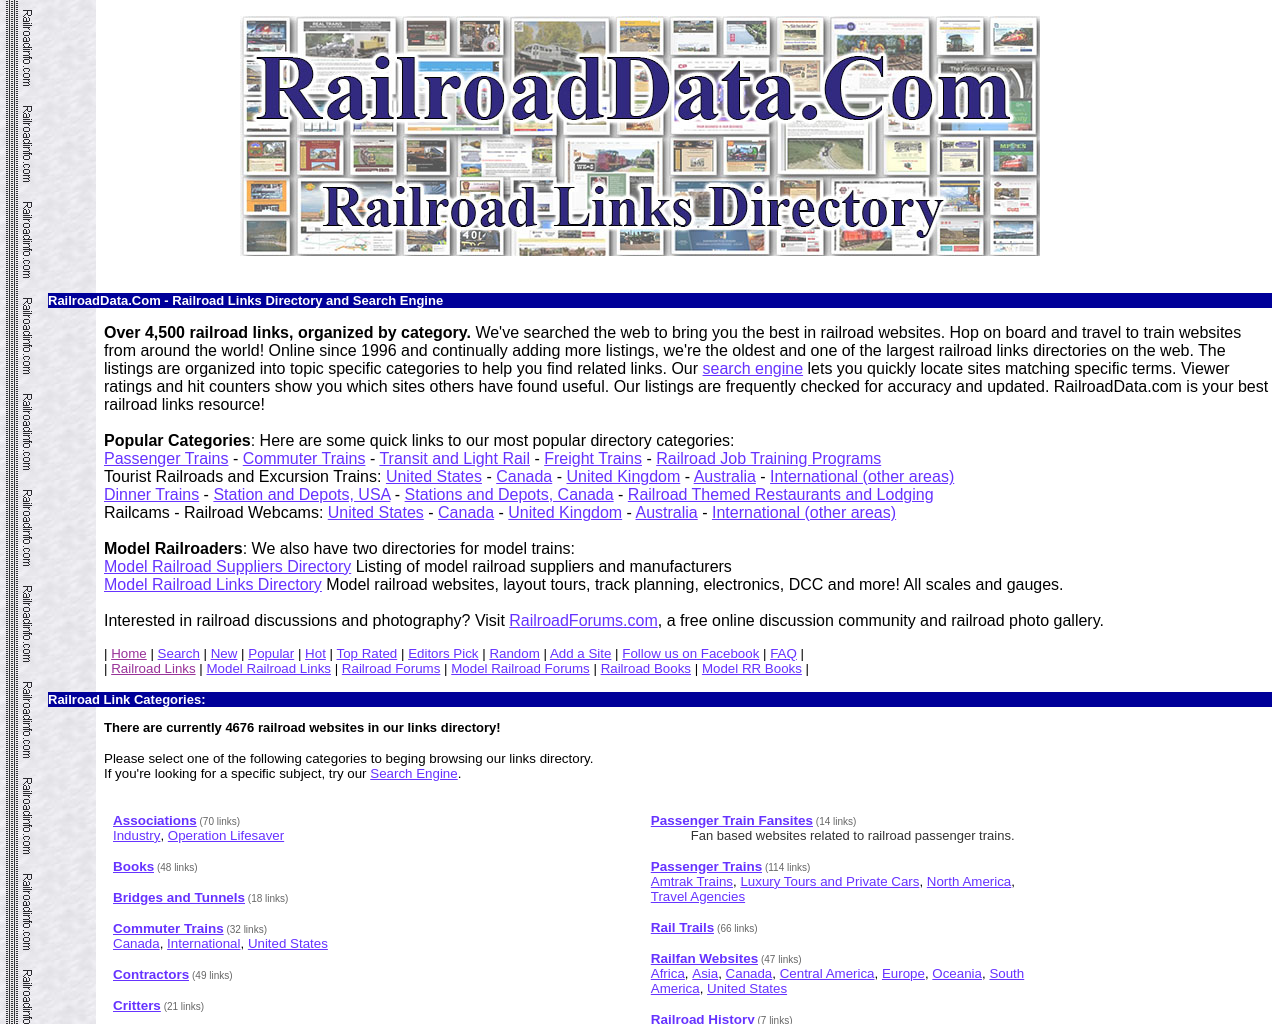 railroaddata.com